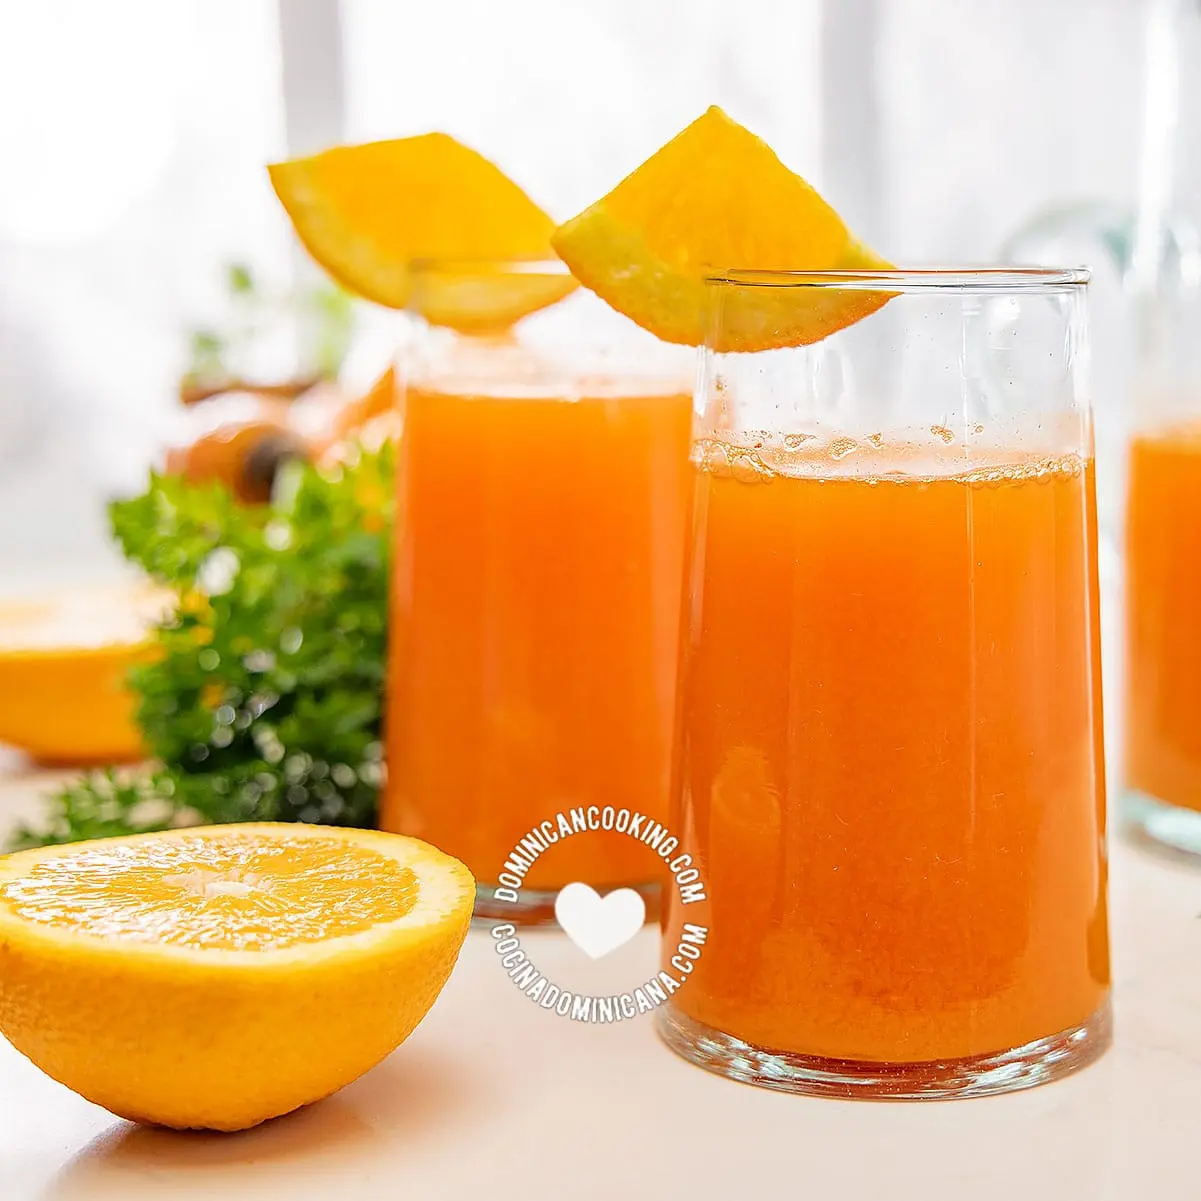 imagen de un jugo de naranja - Qué forma tiene el jugo de naranja